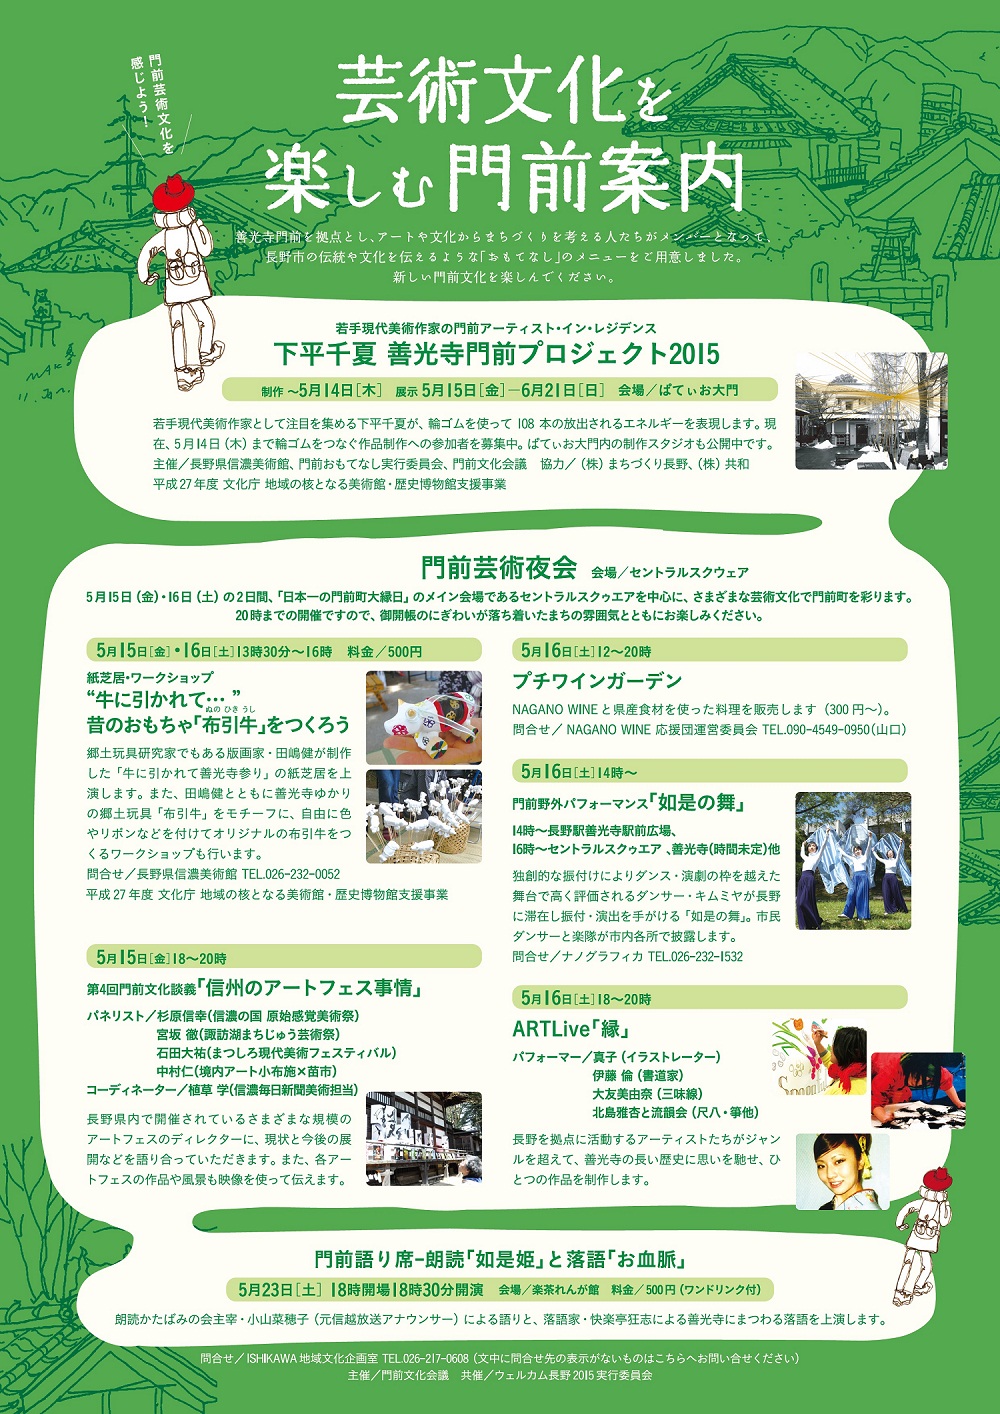 http://nagano-citypromotion.com/daiennichi/images/monzenyakai.jpg